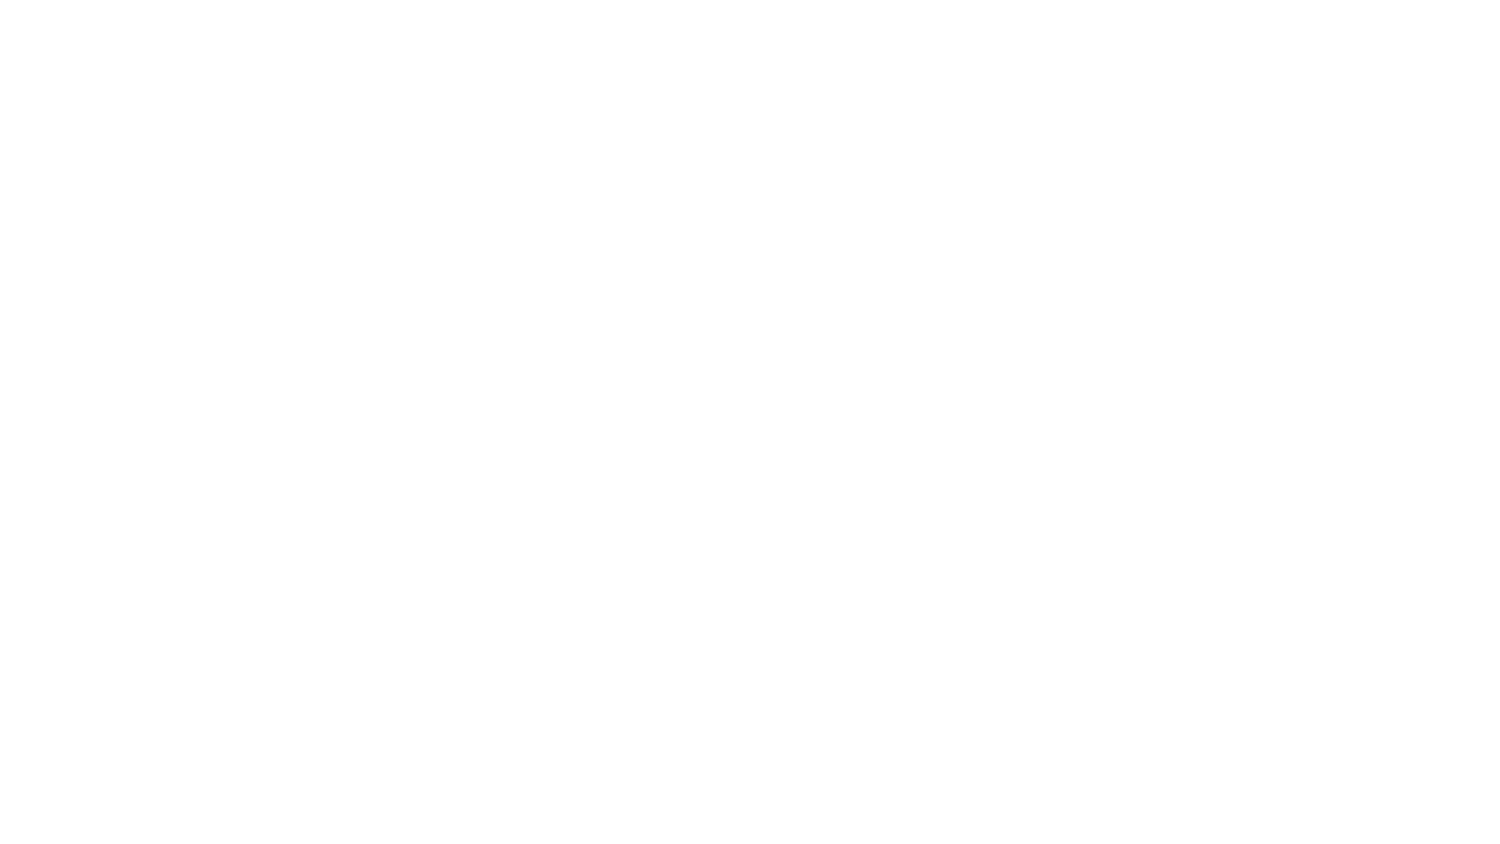 Pelican Glass & Mirror